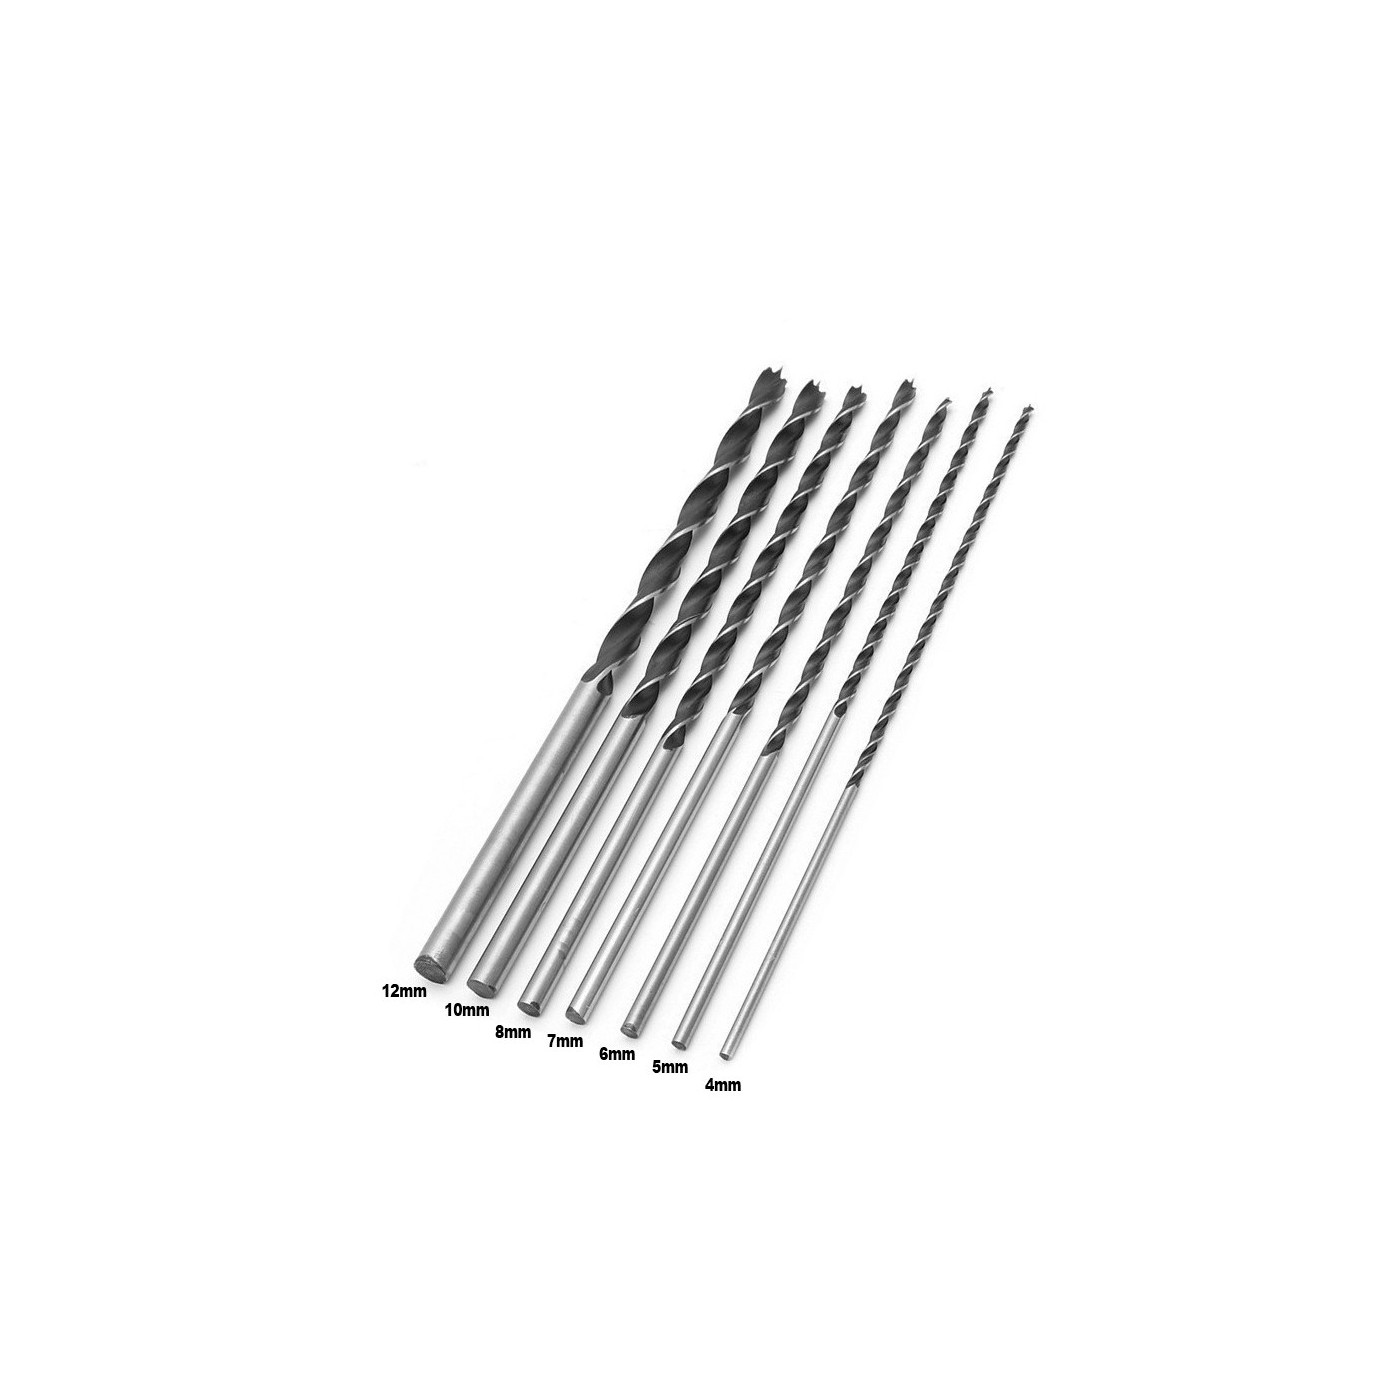 Set of 7 wood drills (4-12 mm) extra long wood drill bits (300